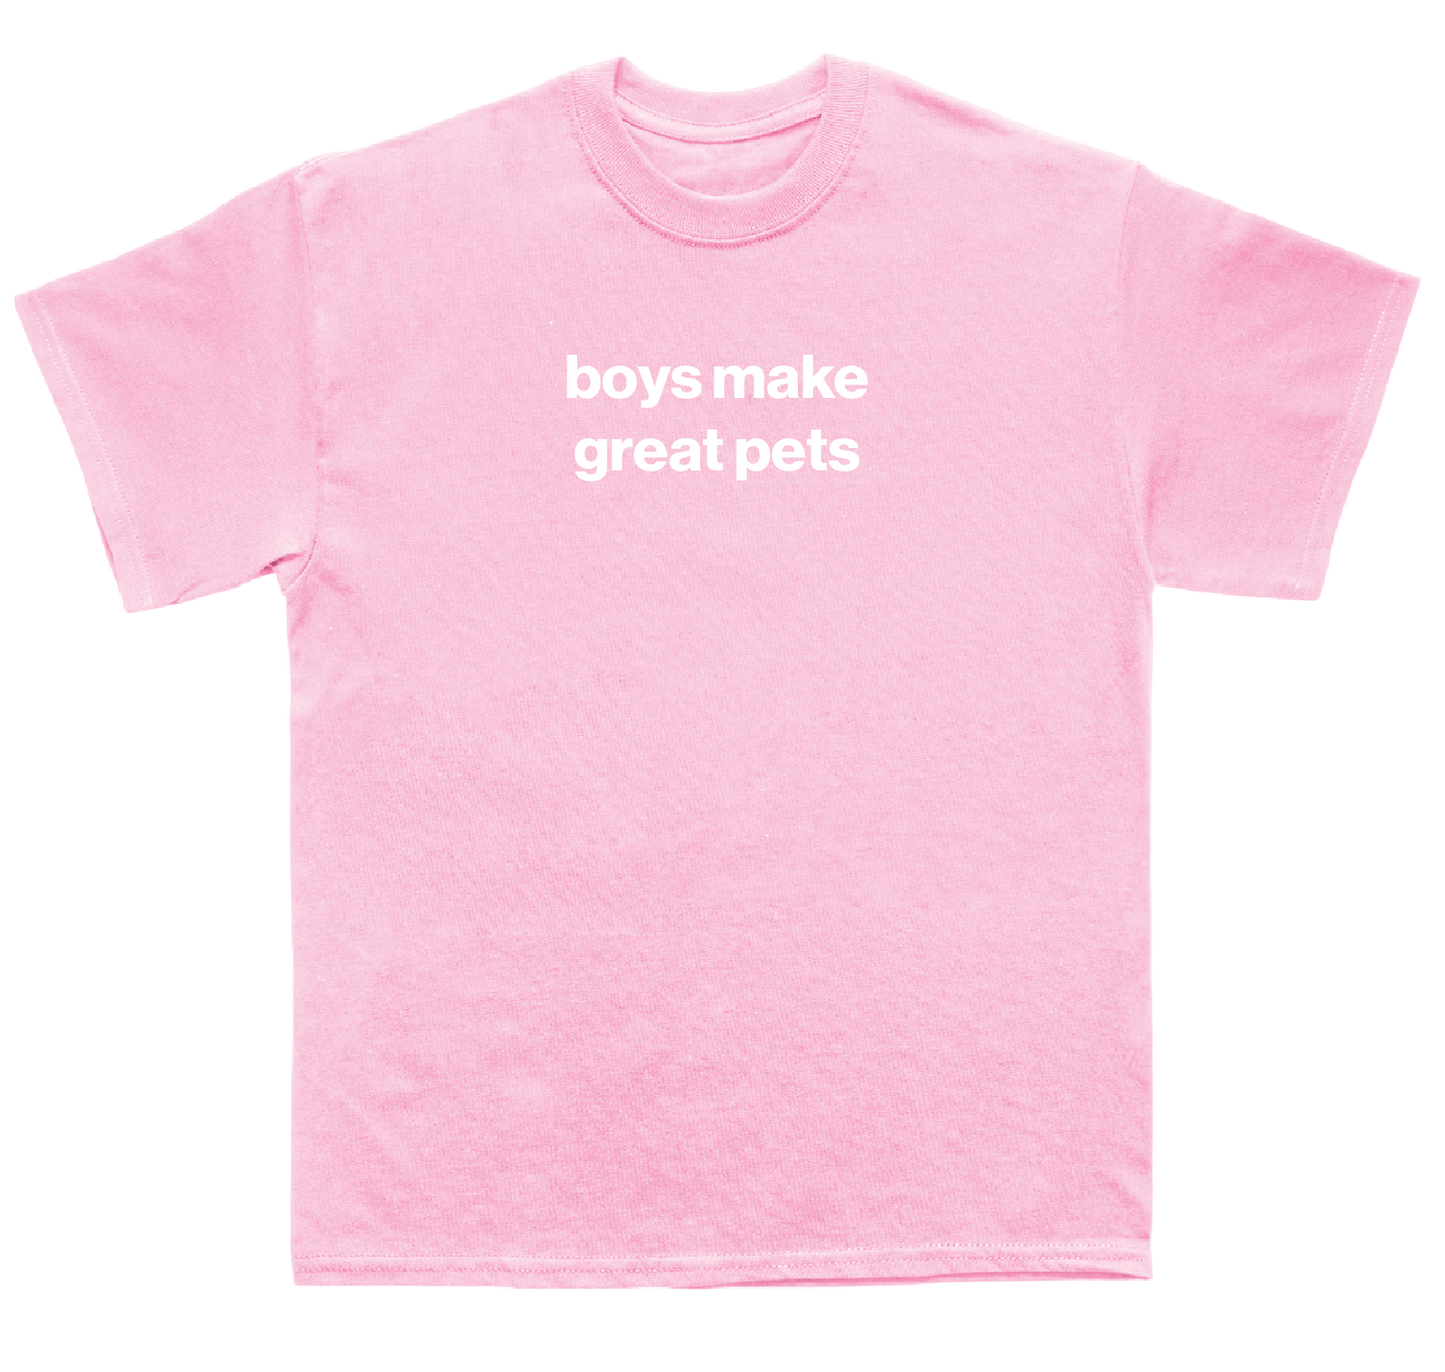 boys make great pets shirt